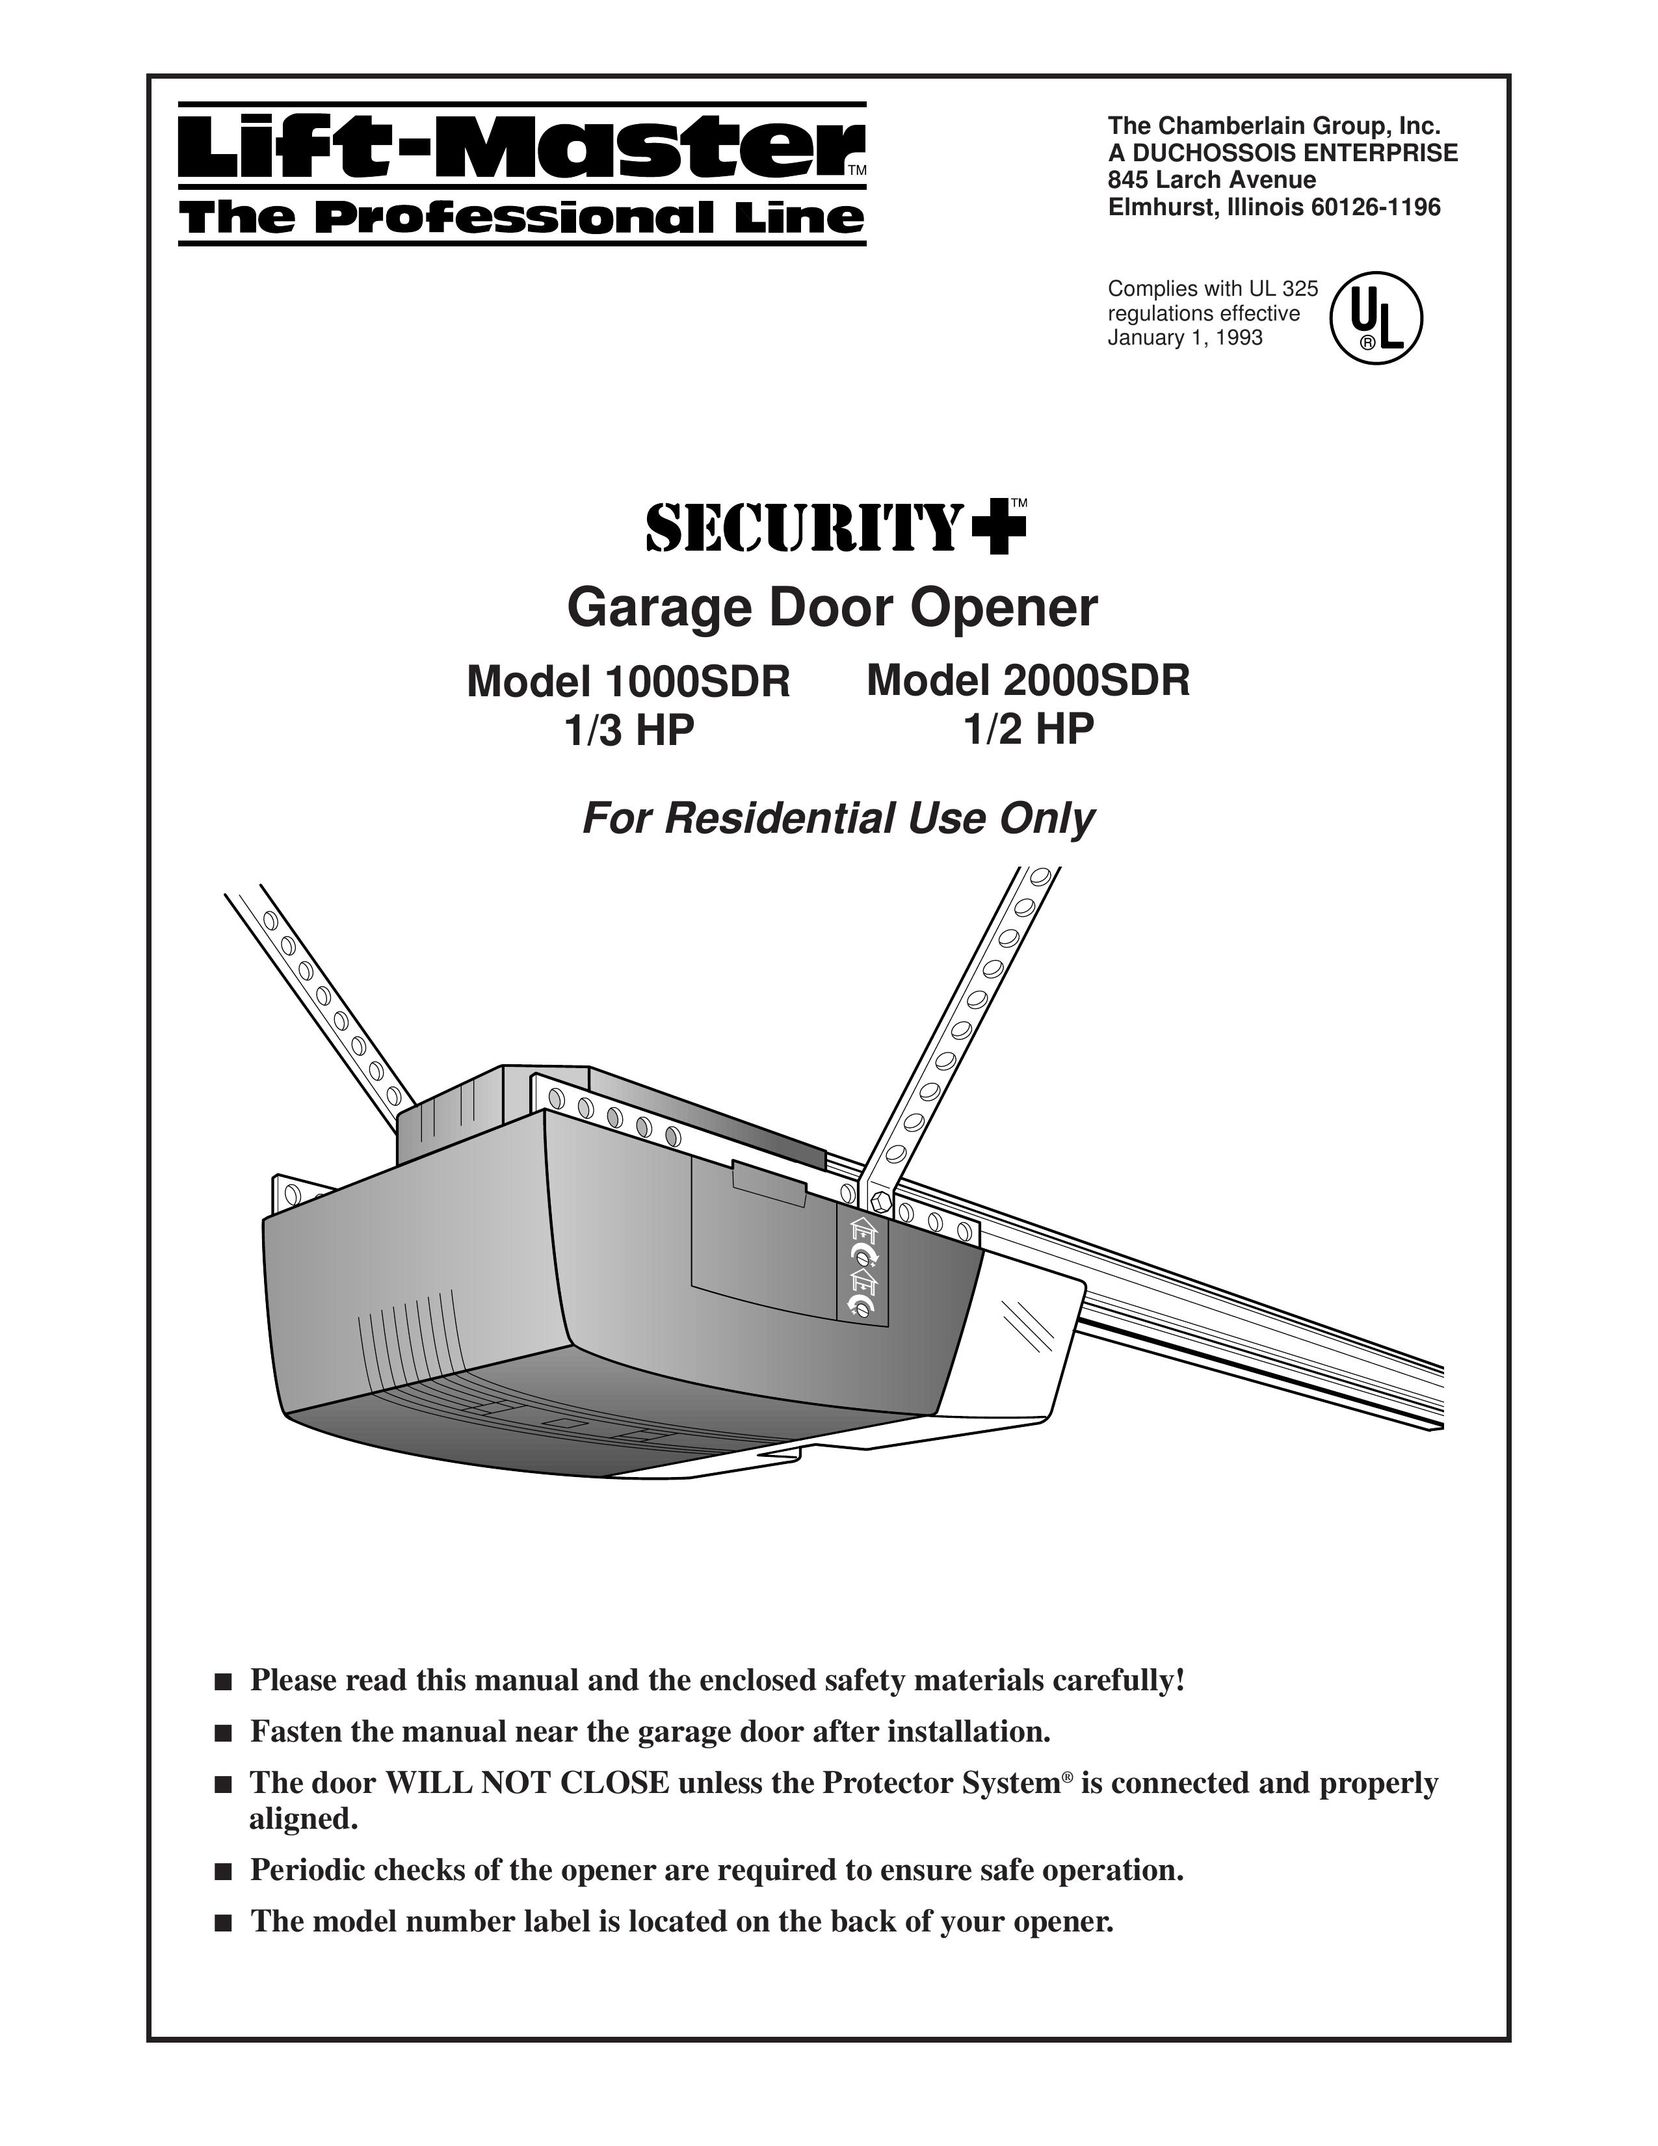 Chamberlain 1000SDR 1/3 HP Garage Door Opener User Manual